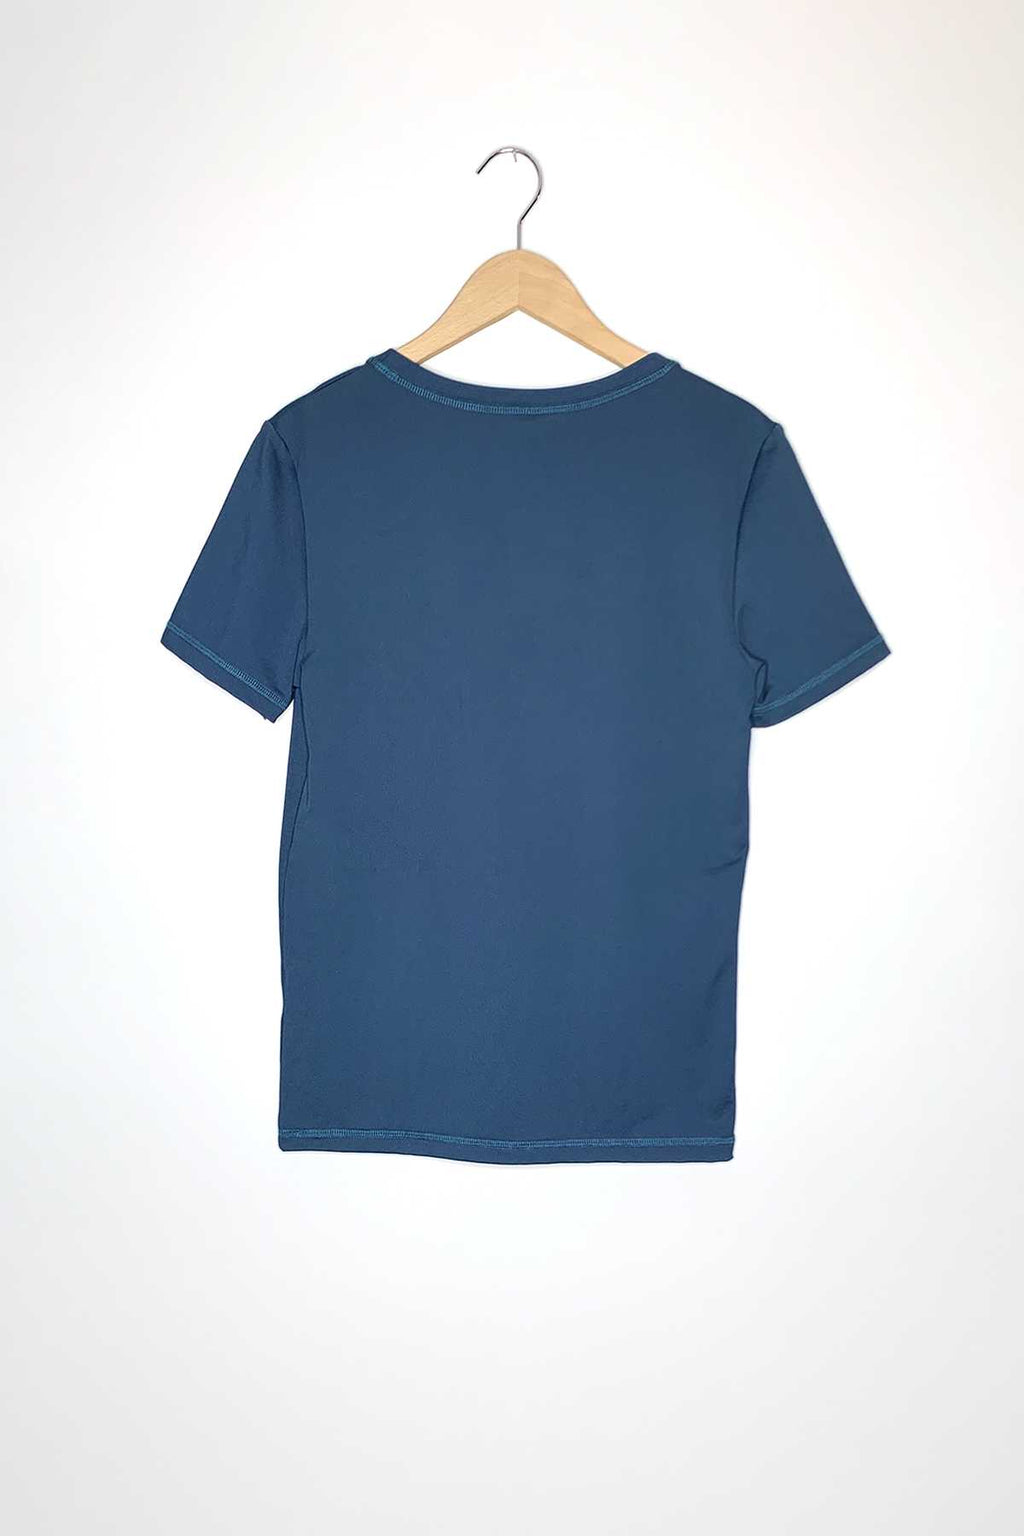 #346 - YUJ X DAMART Men's Thermolactyl T-Shirt // Size S YUJ - House of Mindfulness